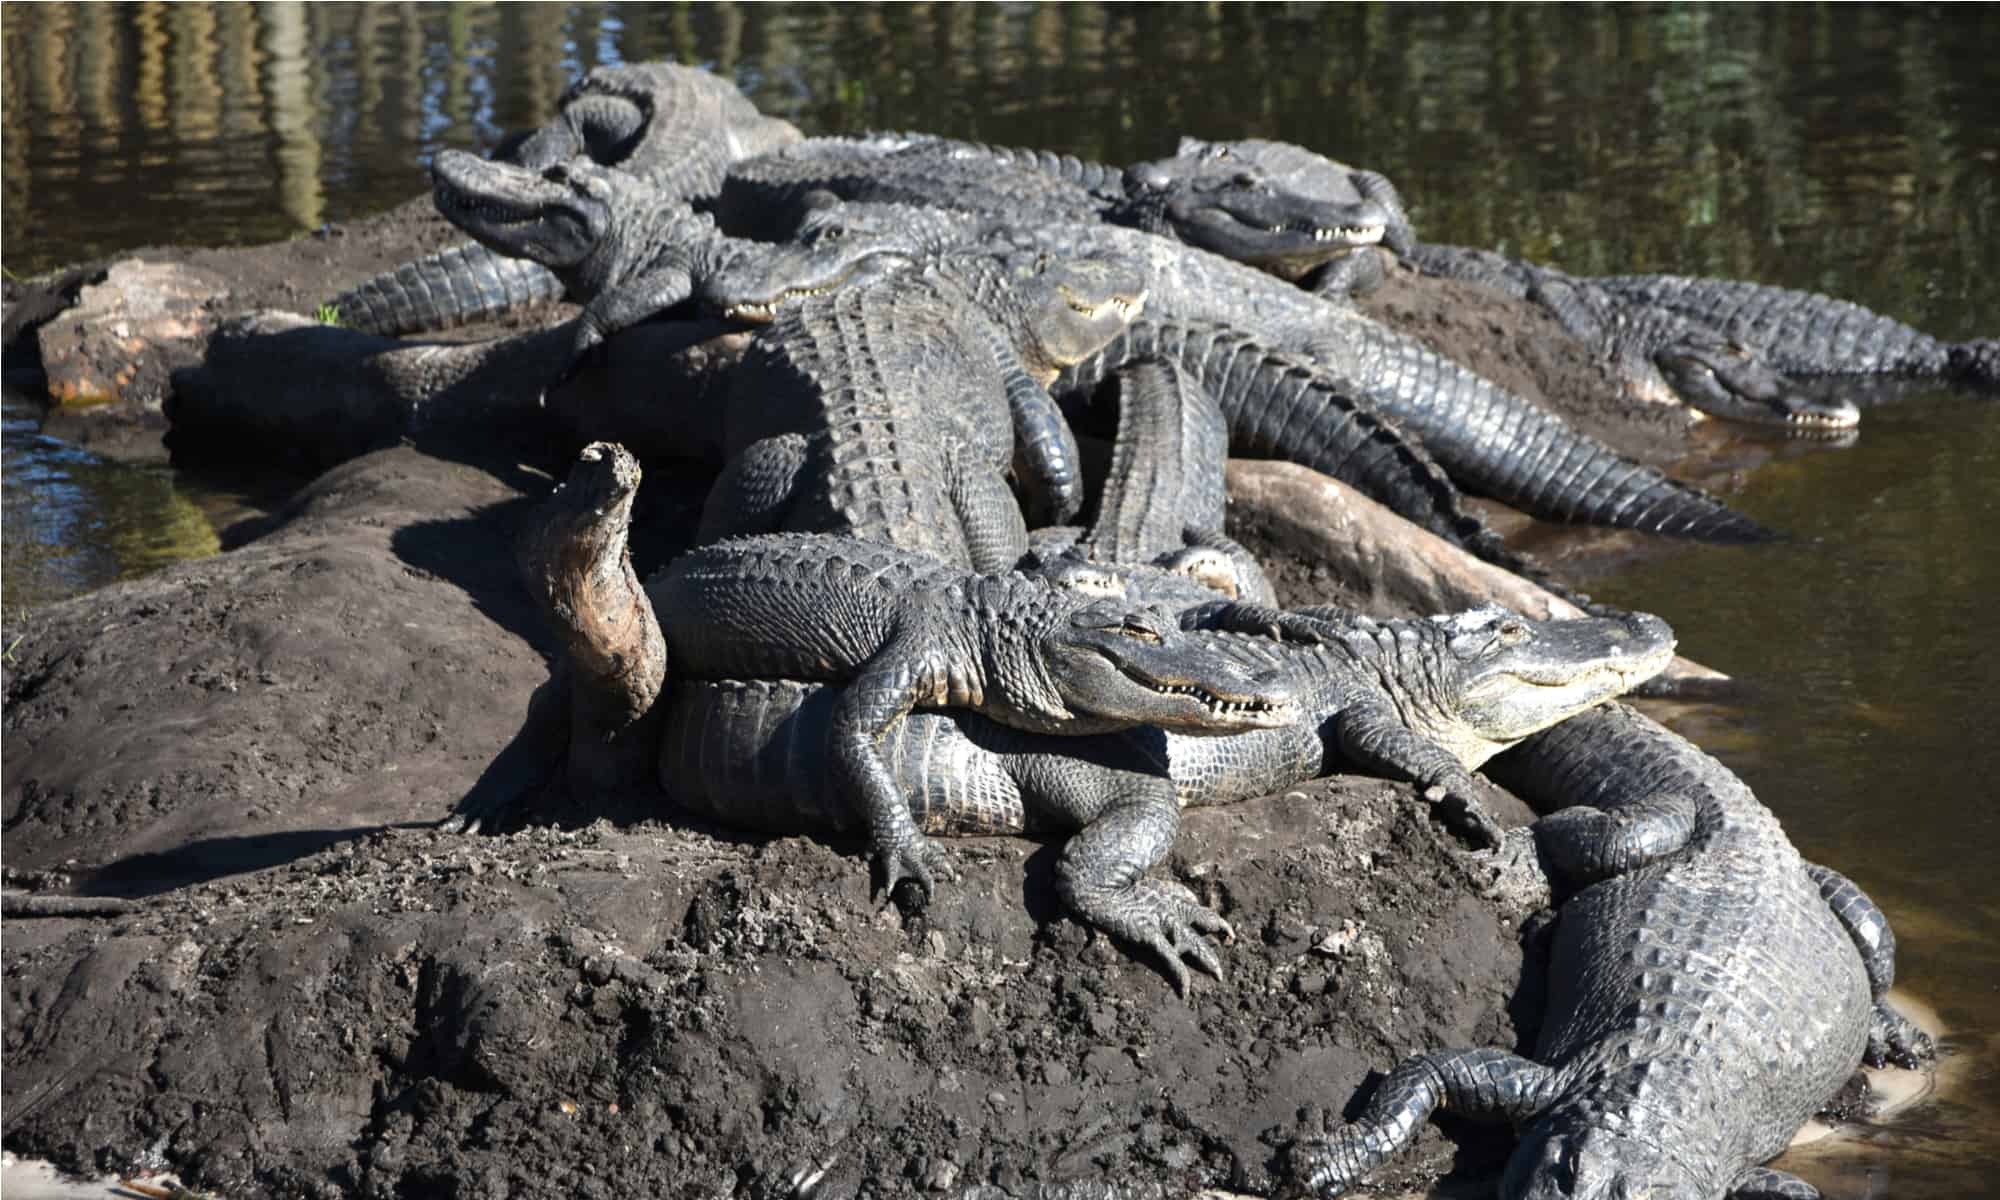 Group of Alligators